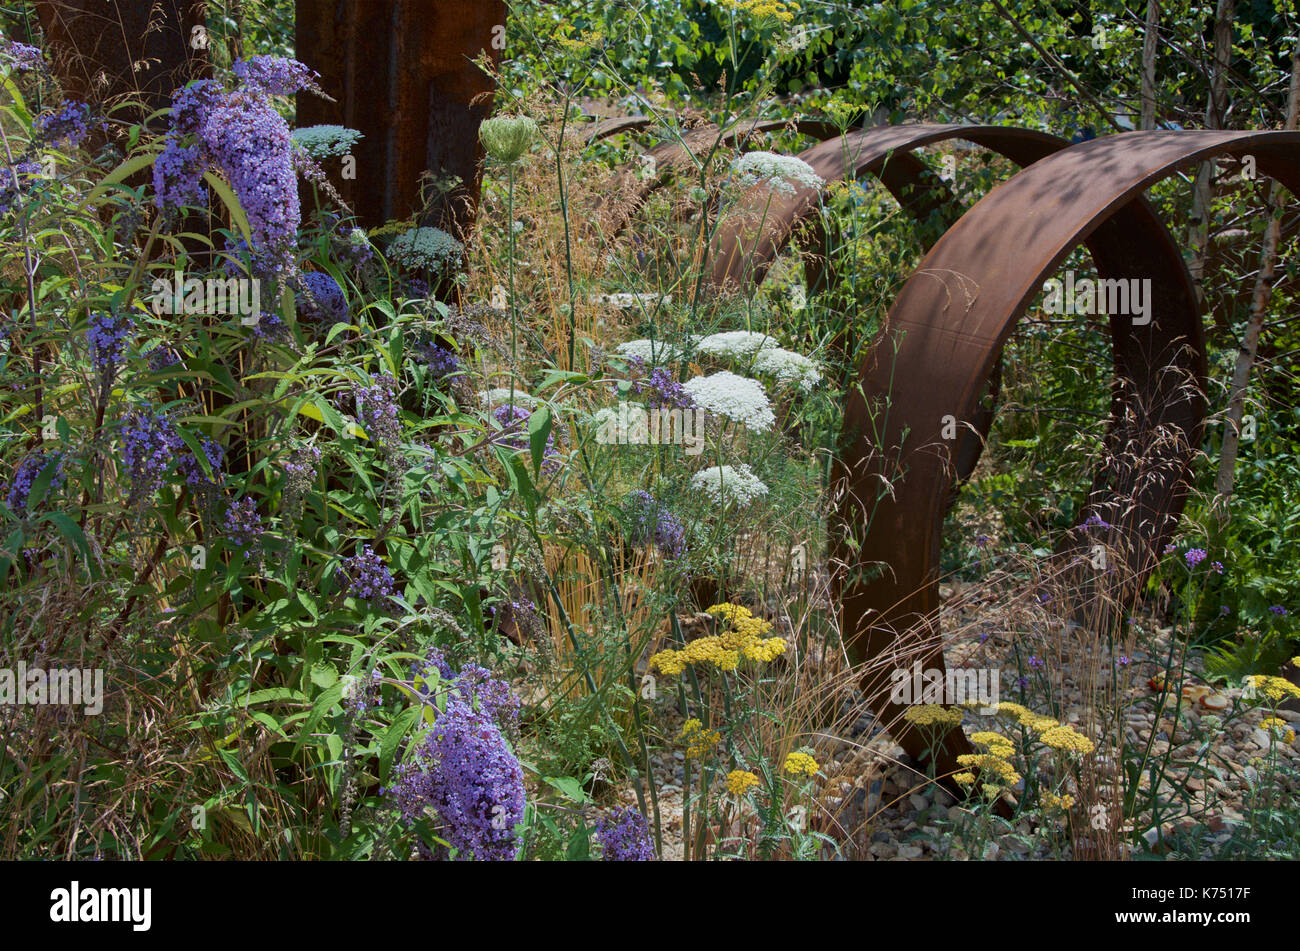 - Brownfield metamorfosis RHS Garden en Hampton Court Palace Flower Show 2017 Foto de stock